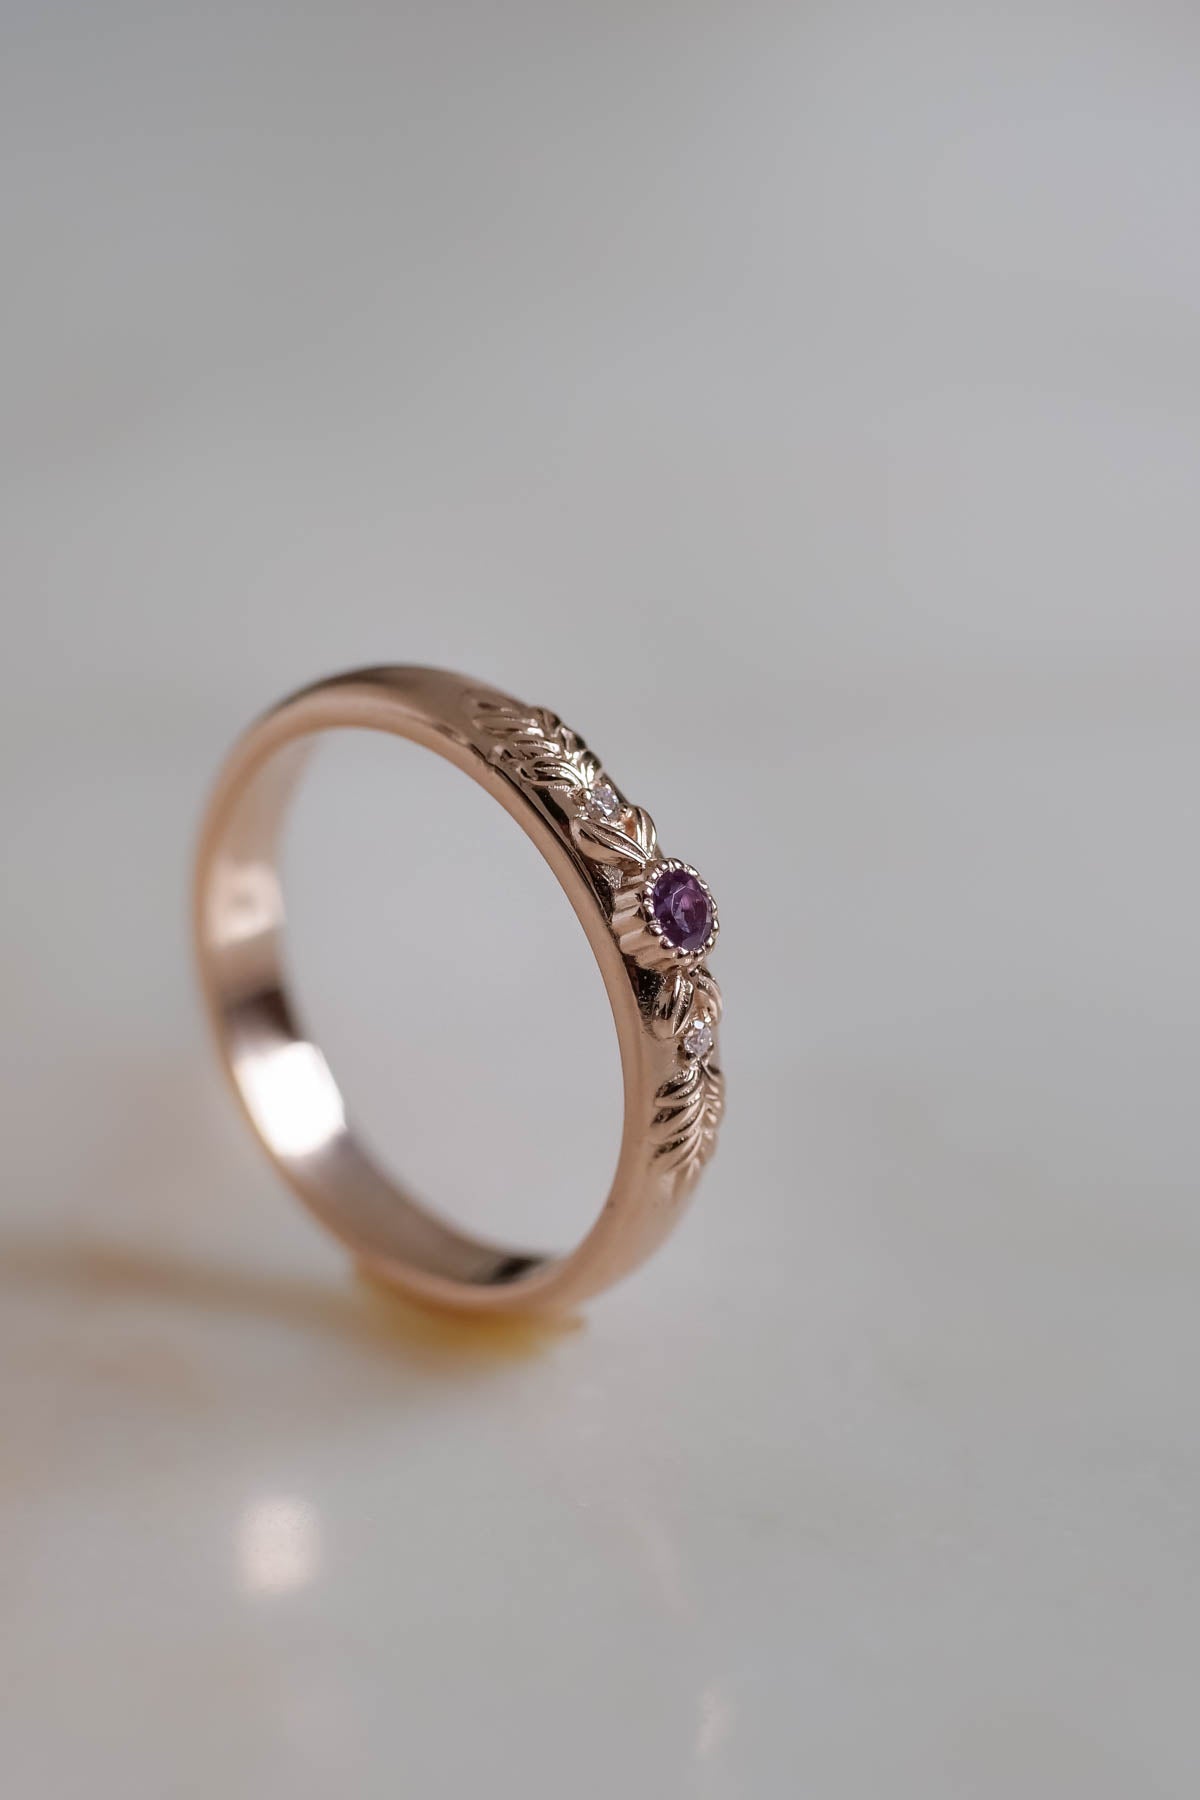 Alexandrite wedding ring, rose gold wedding band / Wreath - Eden Garden Jewelry™